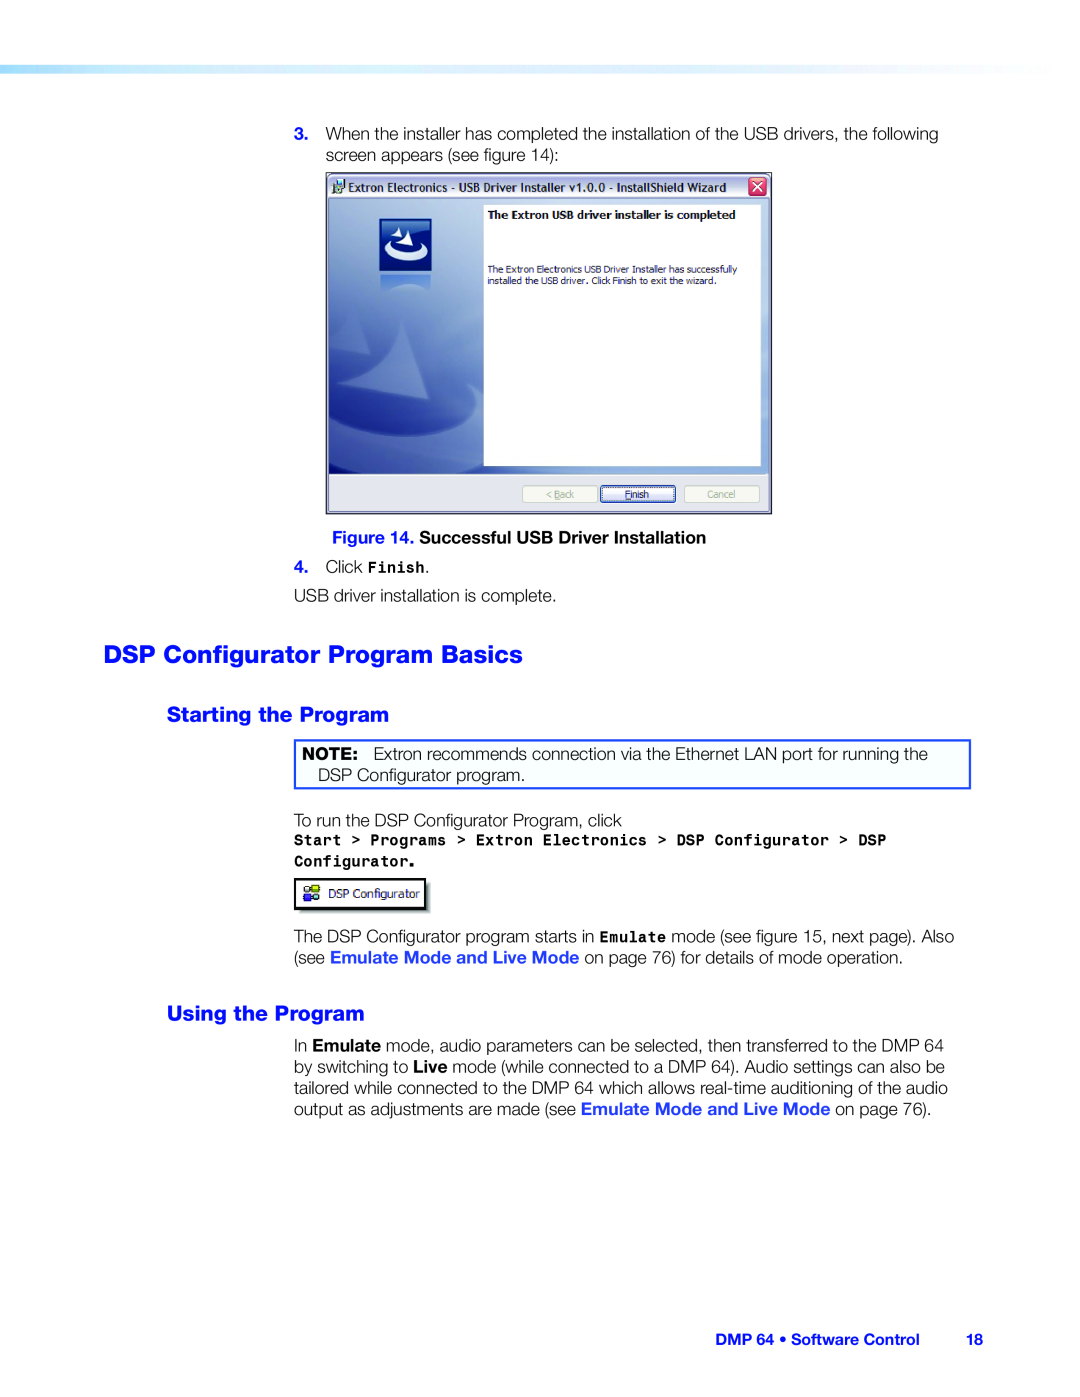 Extron electronic DMP 64 manual DSP Configurator Program Basics, Starting the Program, Using the Program 